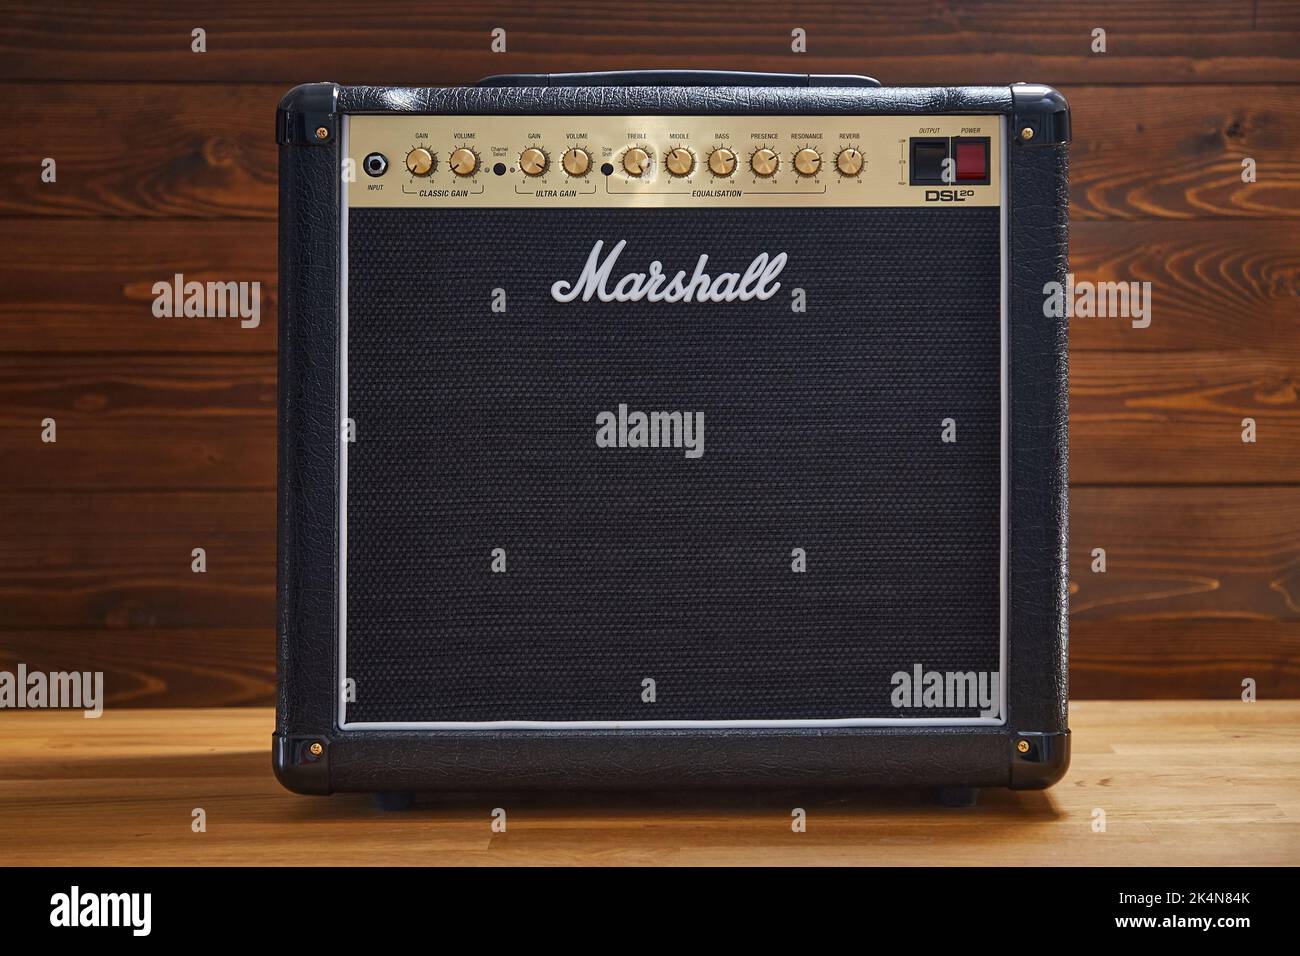 Marshall guitar amplifier combo Stock Photo